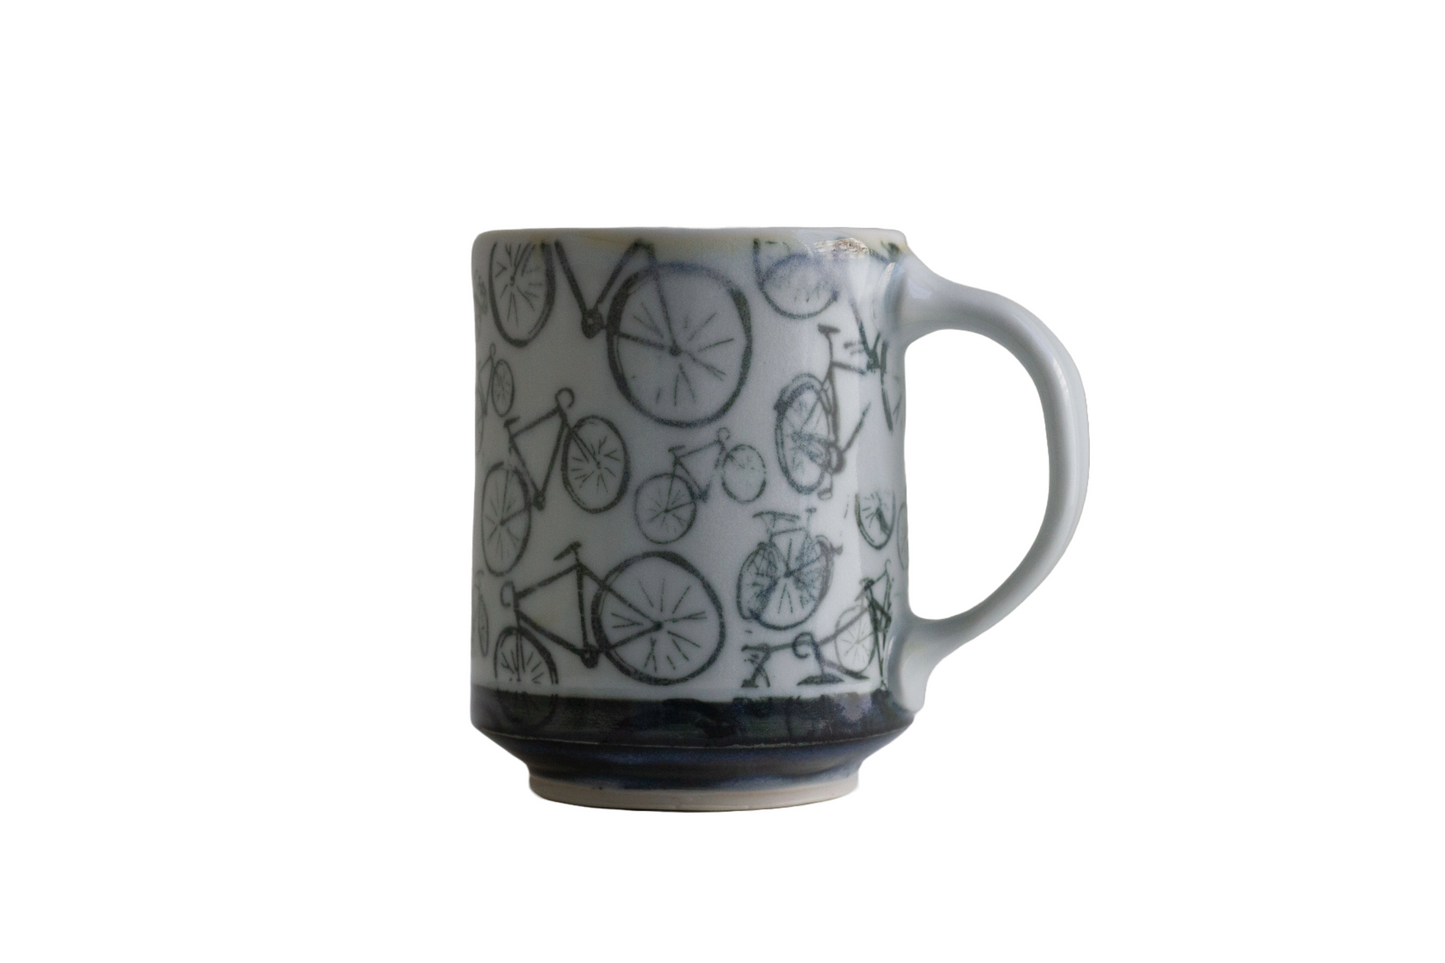 Stephanie Dukat: Bicycle Mugs